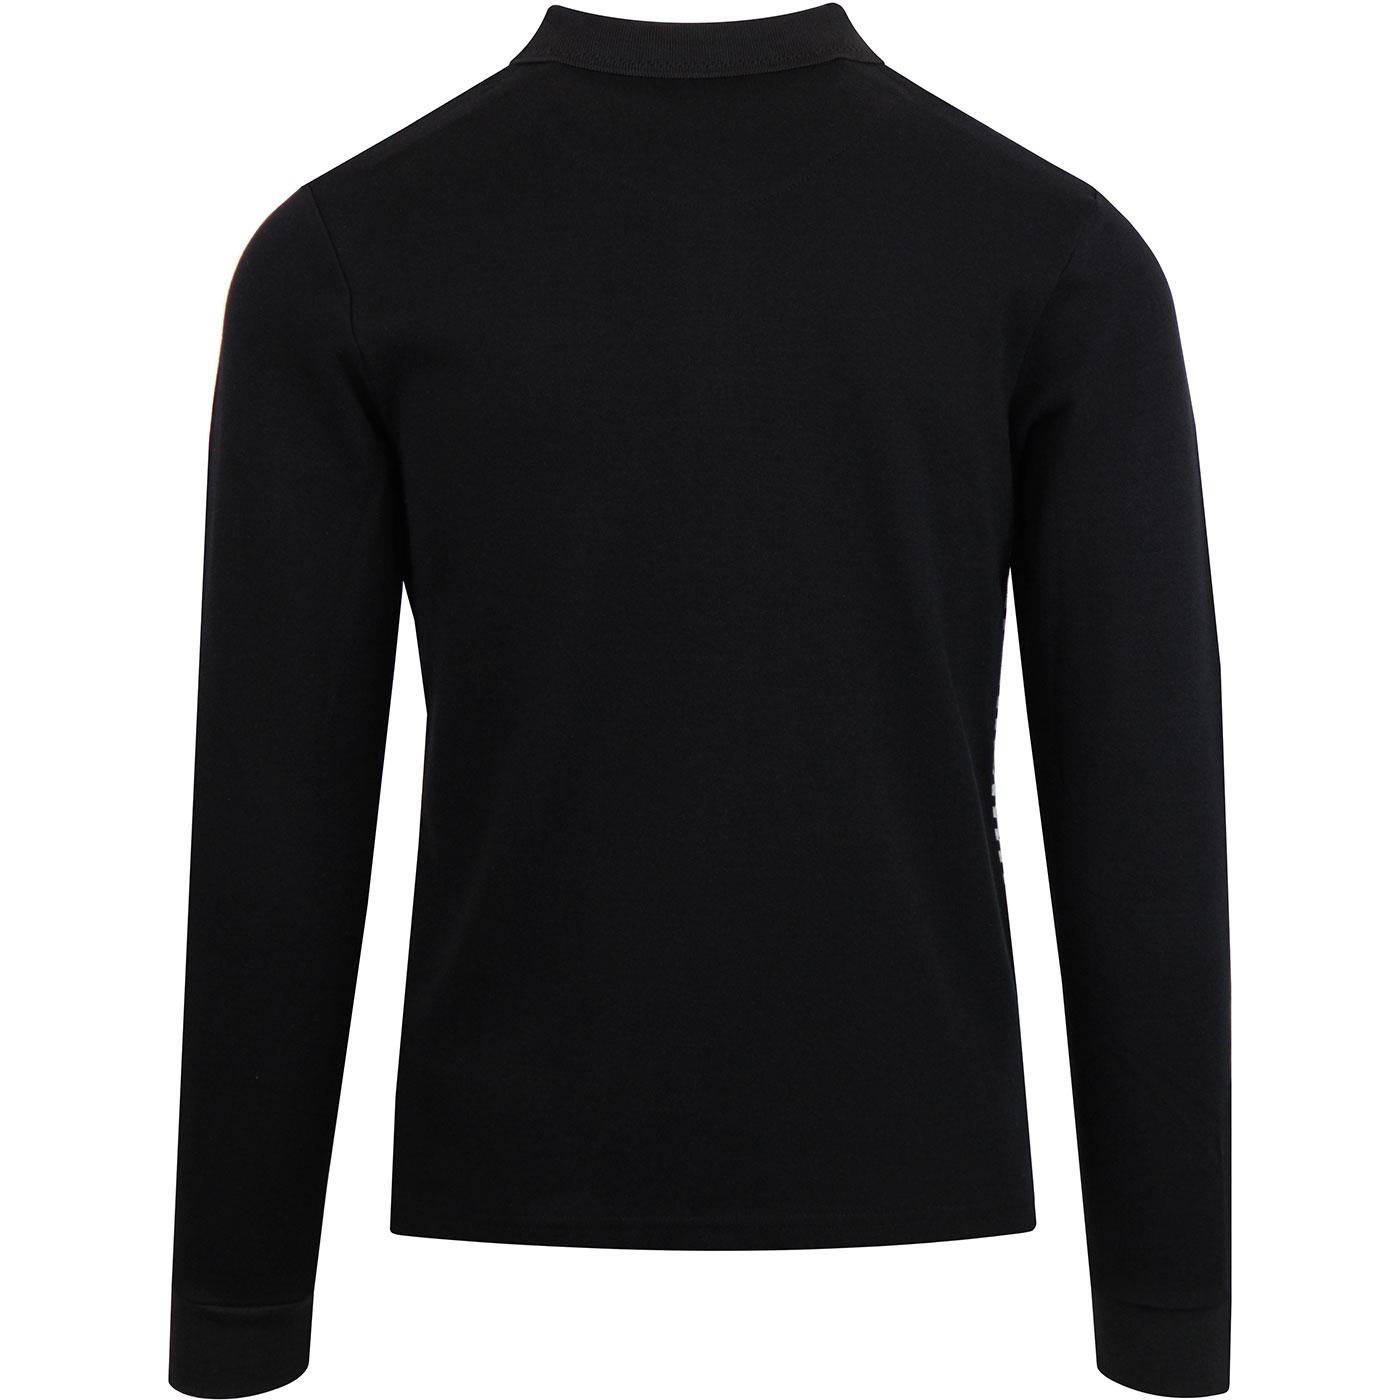 SKA & SOUL Men's Mod Checkerboard Long Sleeve Polo Shirt